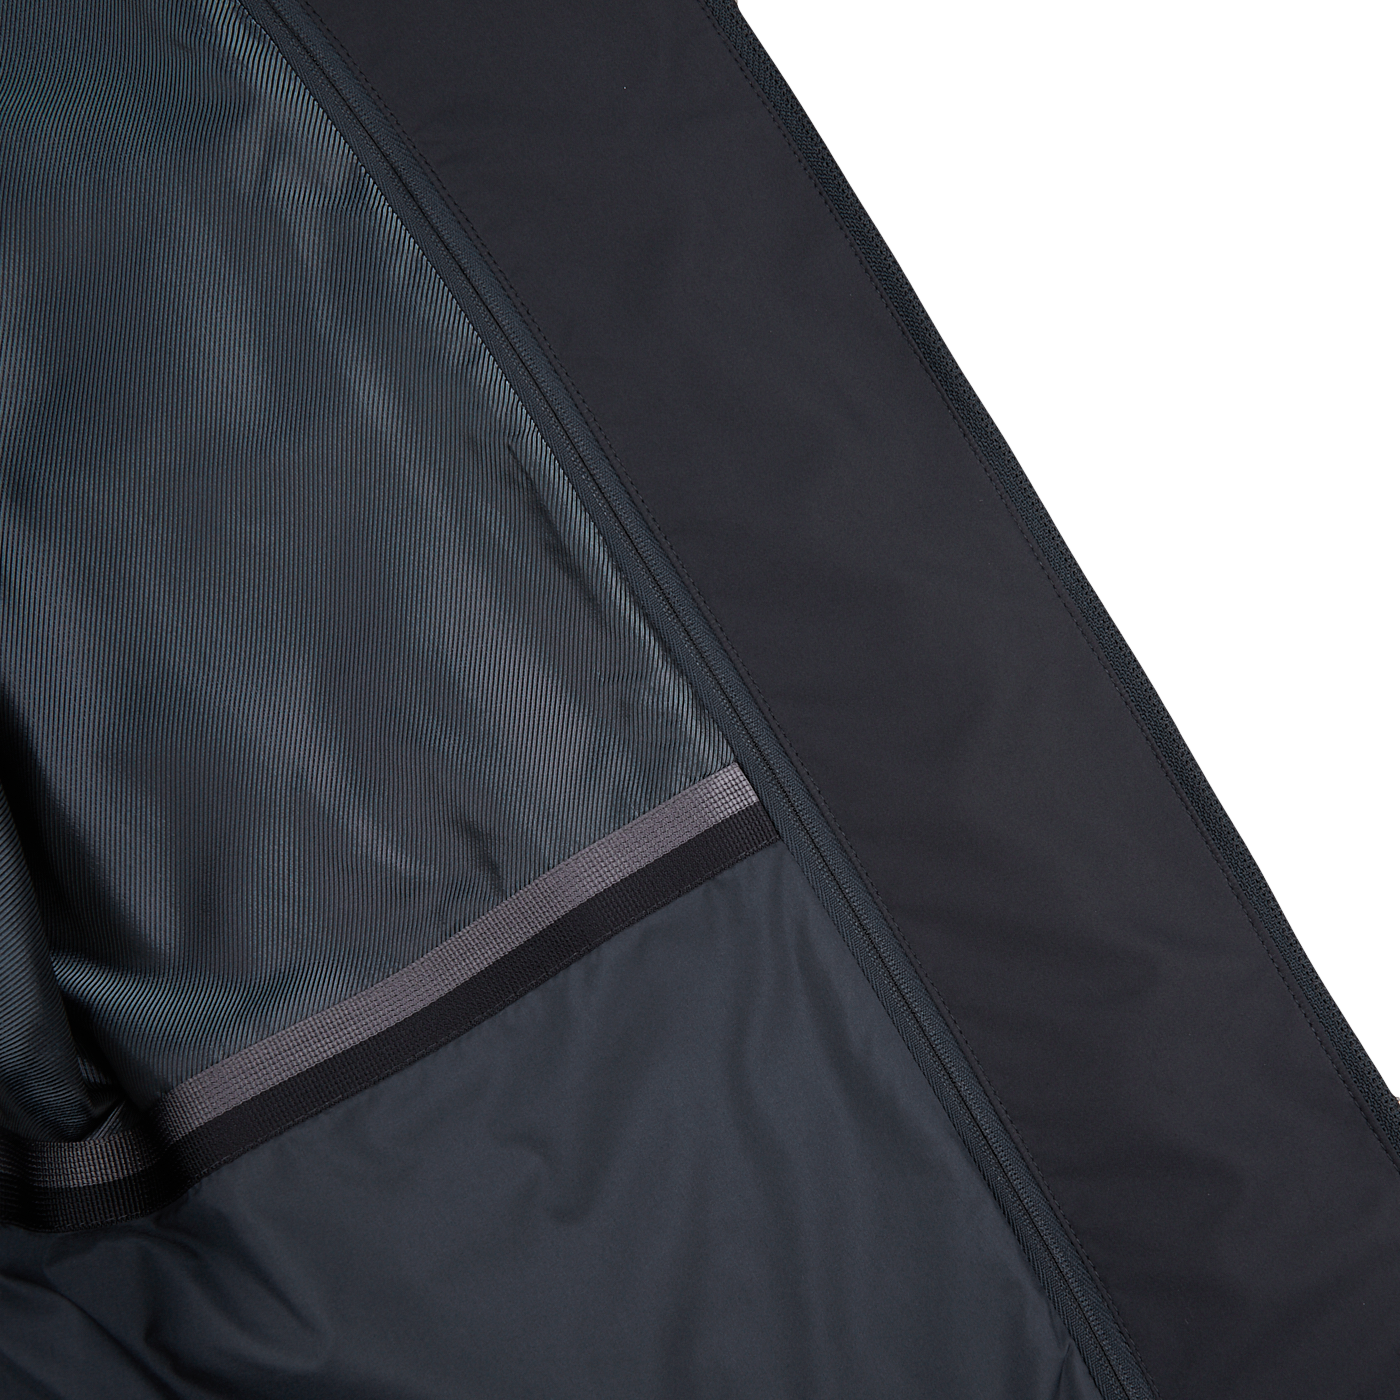 The inside of a Herno navy blue nylon hybrid blazer with a zippered pocket.